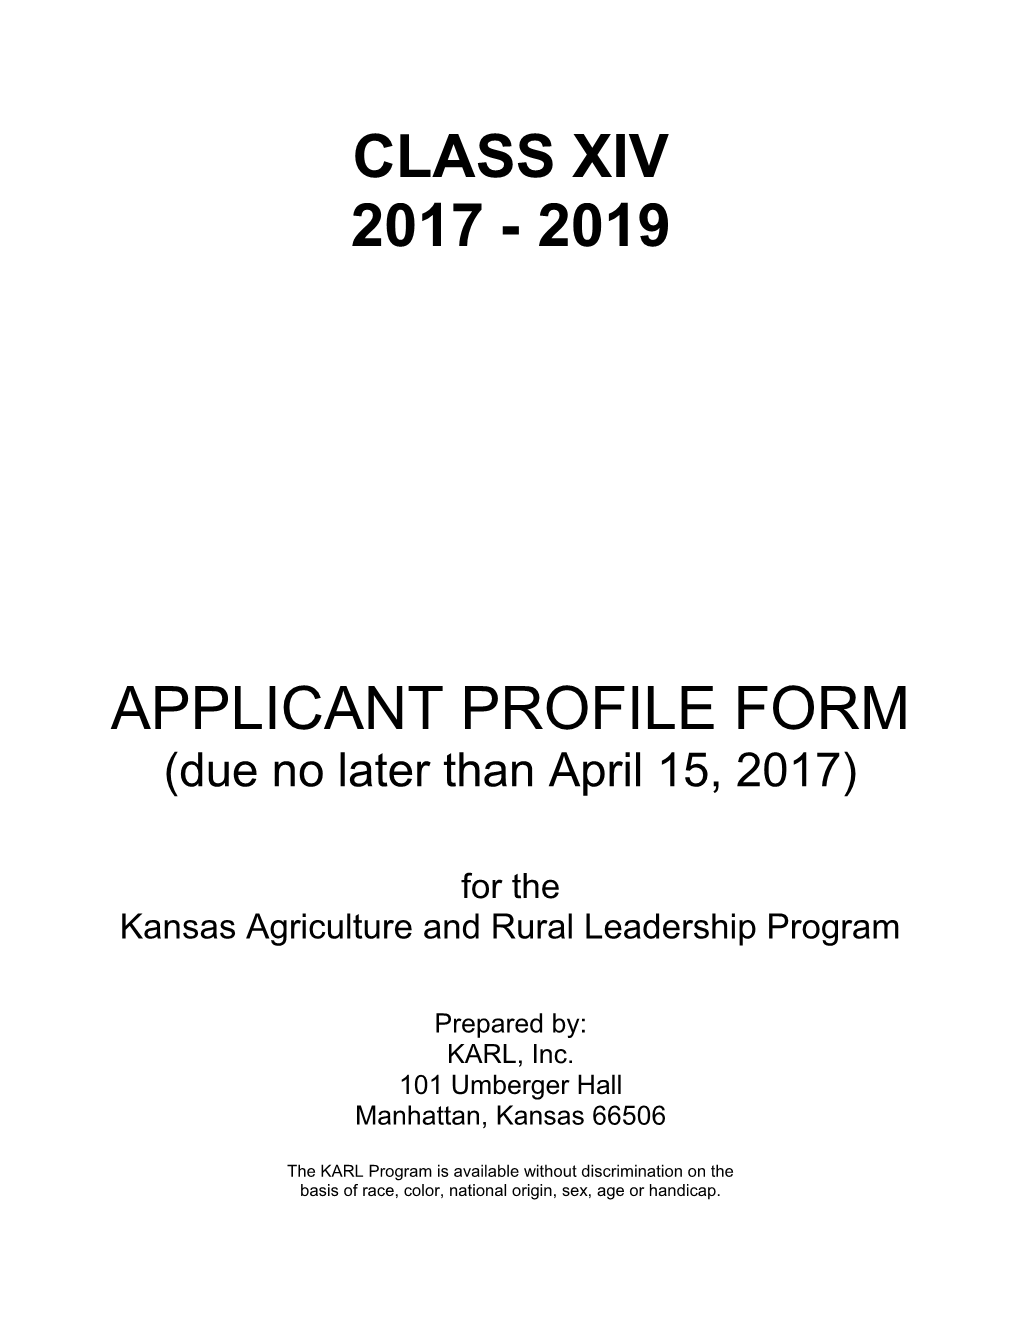 Kansas Agriculture and Rural Leadership Program